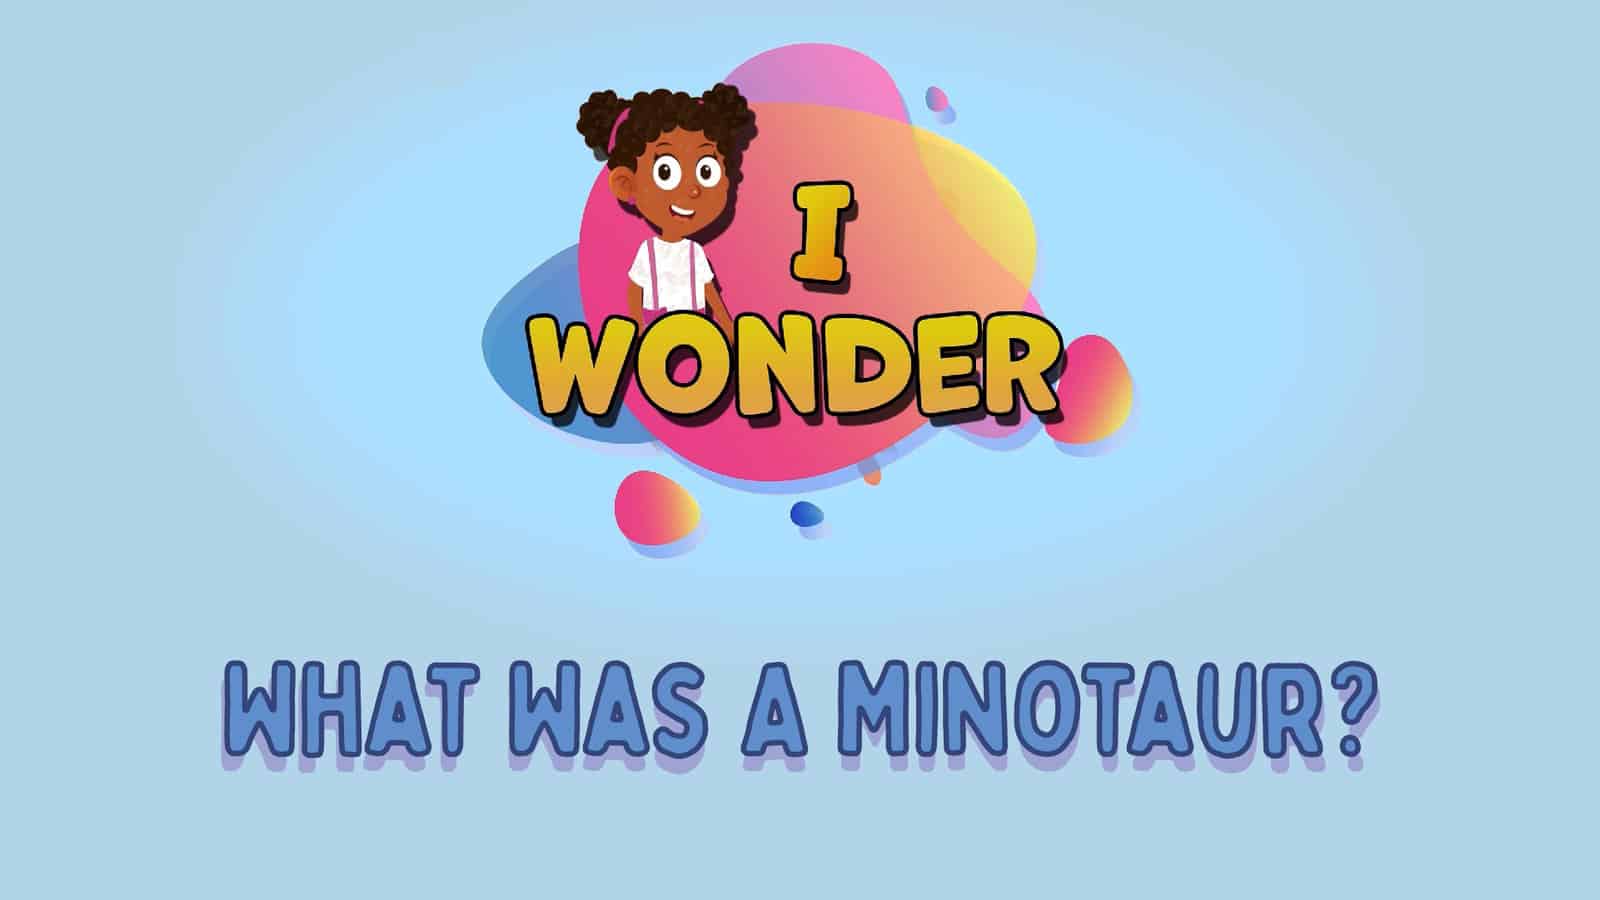 What Was A Minotaur?